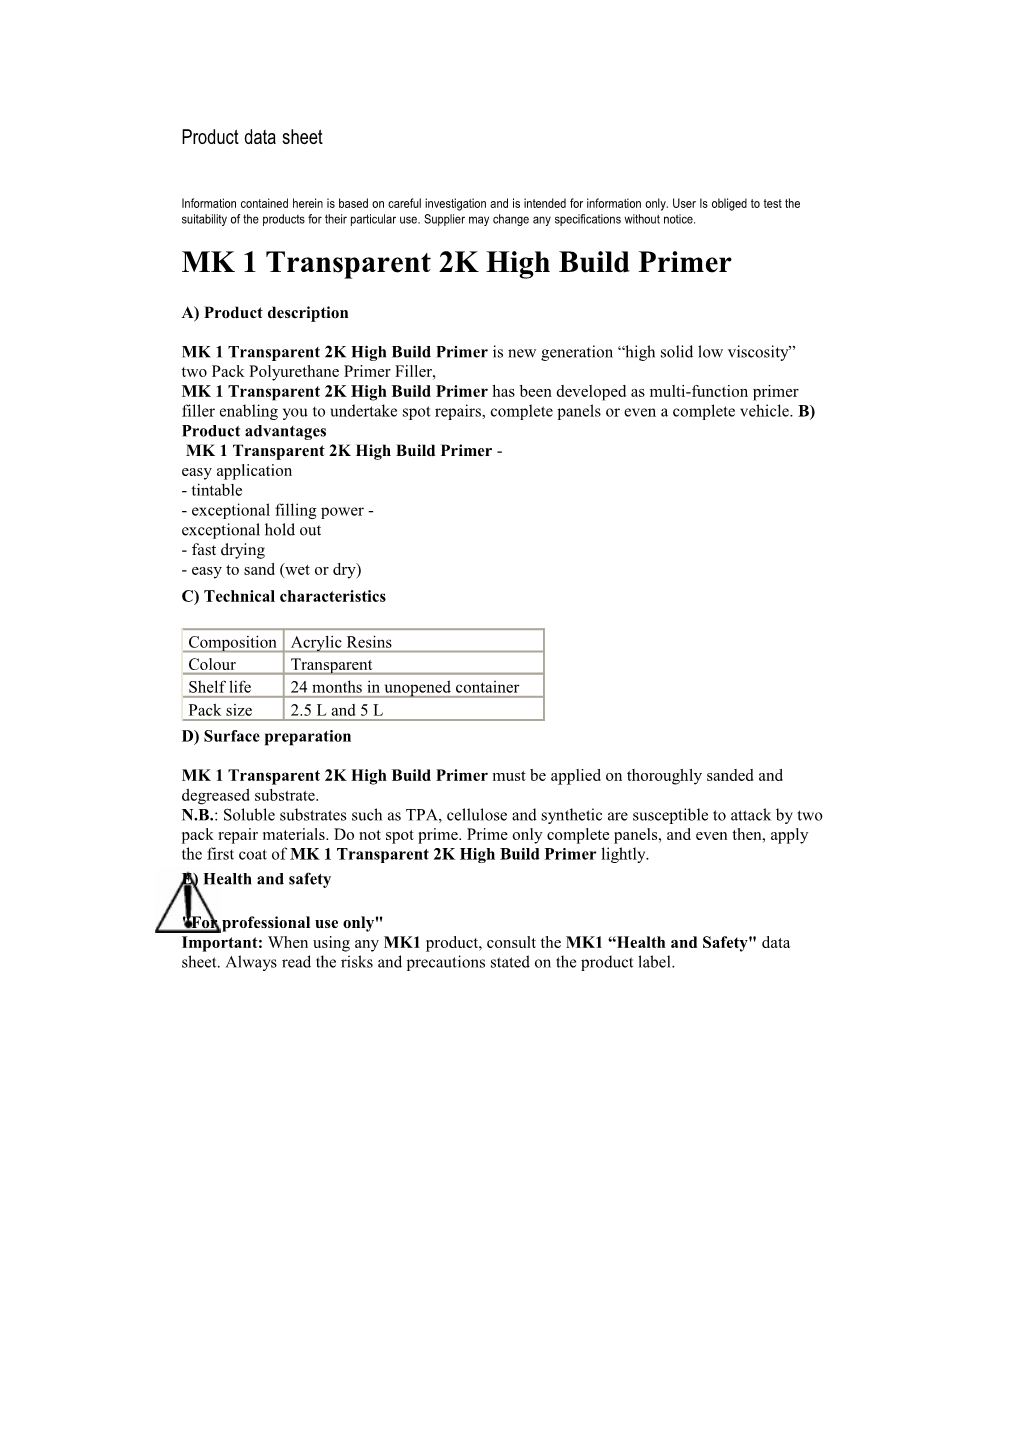 Mk1transparent2khighbuildprimer Is Newgeneration High Solid Low Viscosity Two Pack Polyurethane